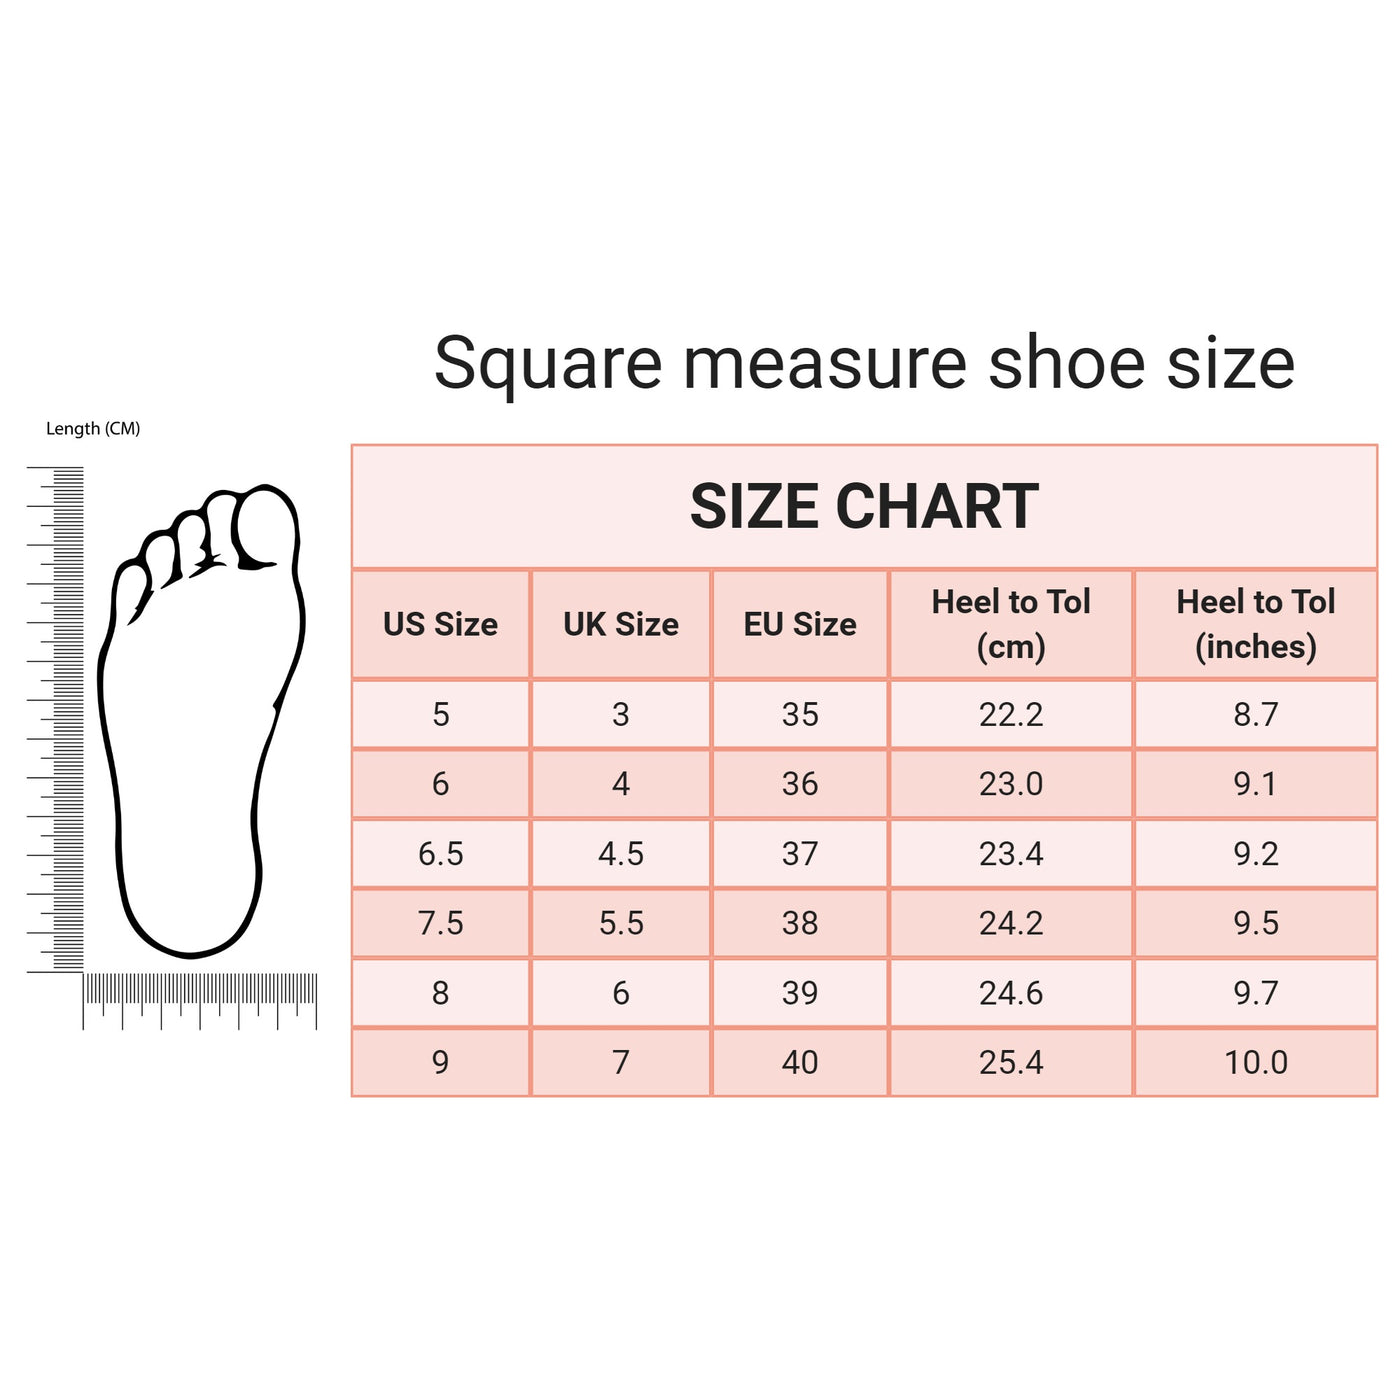 Bublédon Platform Ankle Strap Open Toe Chunky Heel Sandals for Women